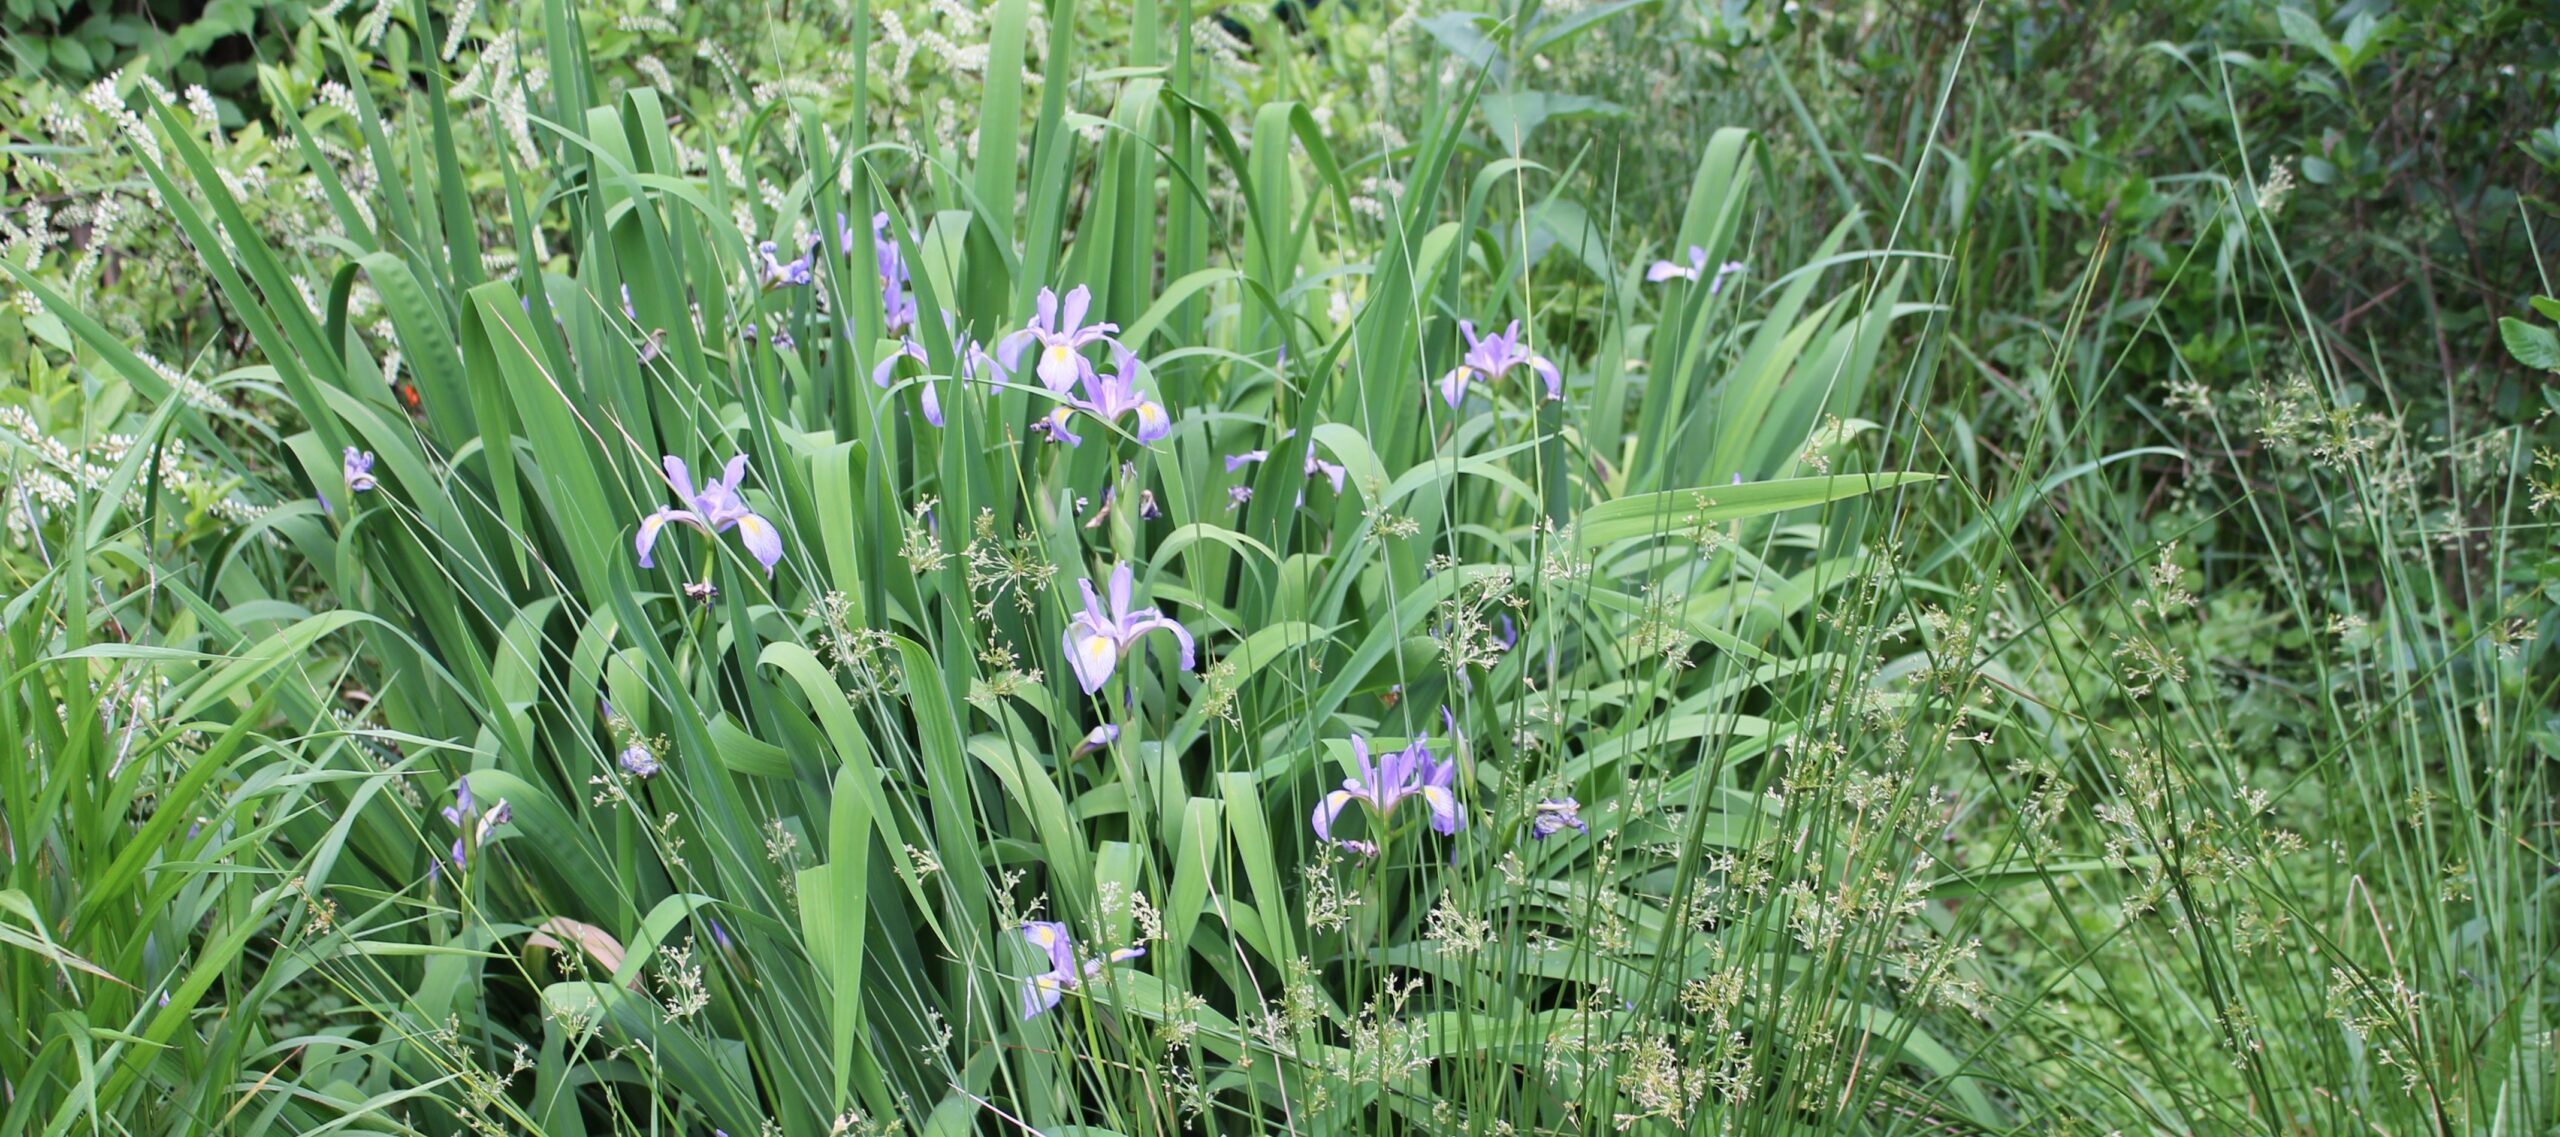 Blue flag iris (Iris versicolor) is a valuable rain garden plant